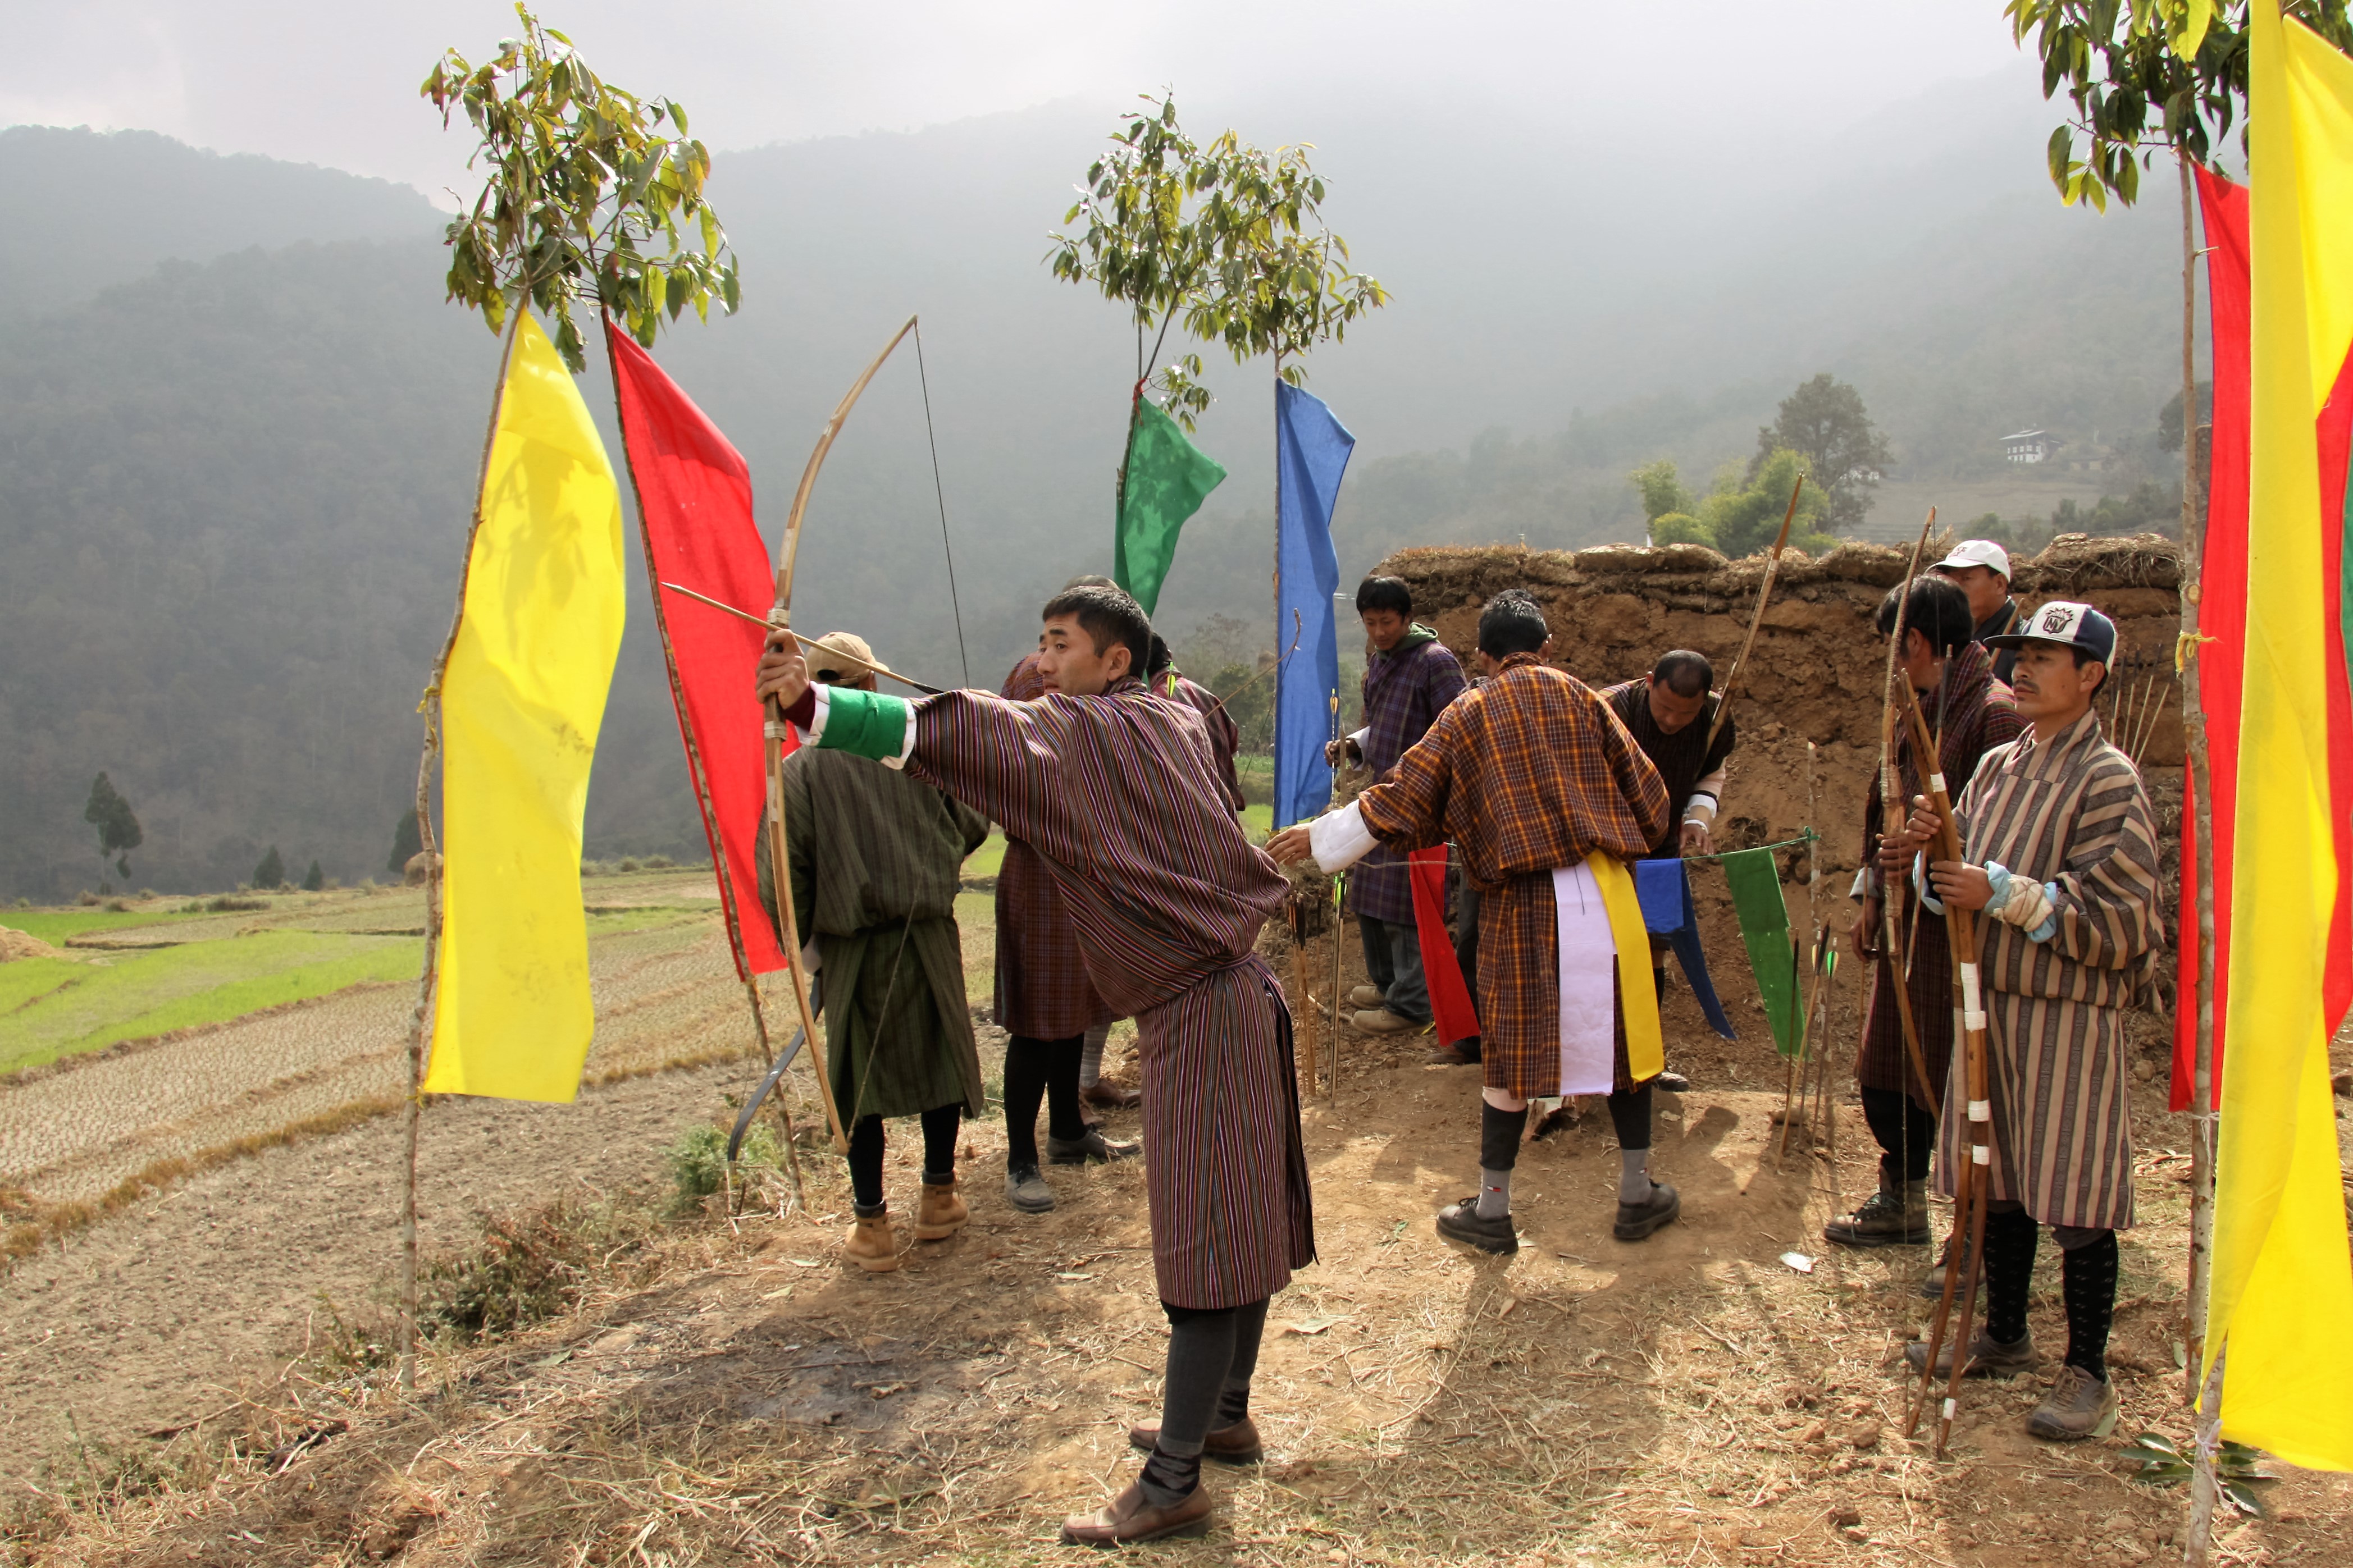 Archery-match-in-countryside | Bhutan Visit